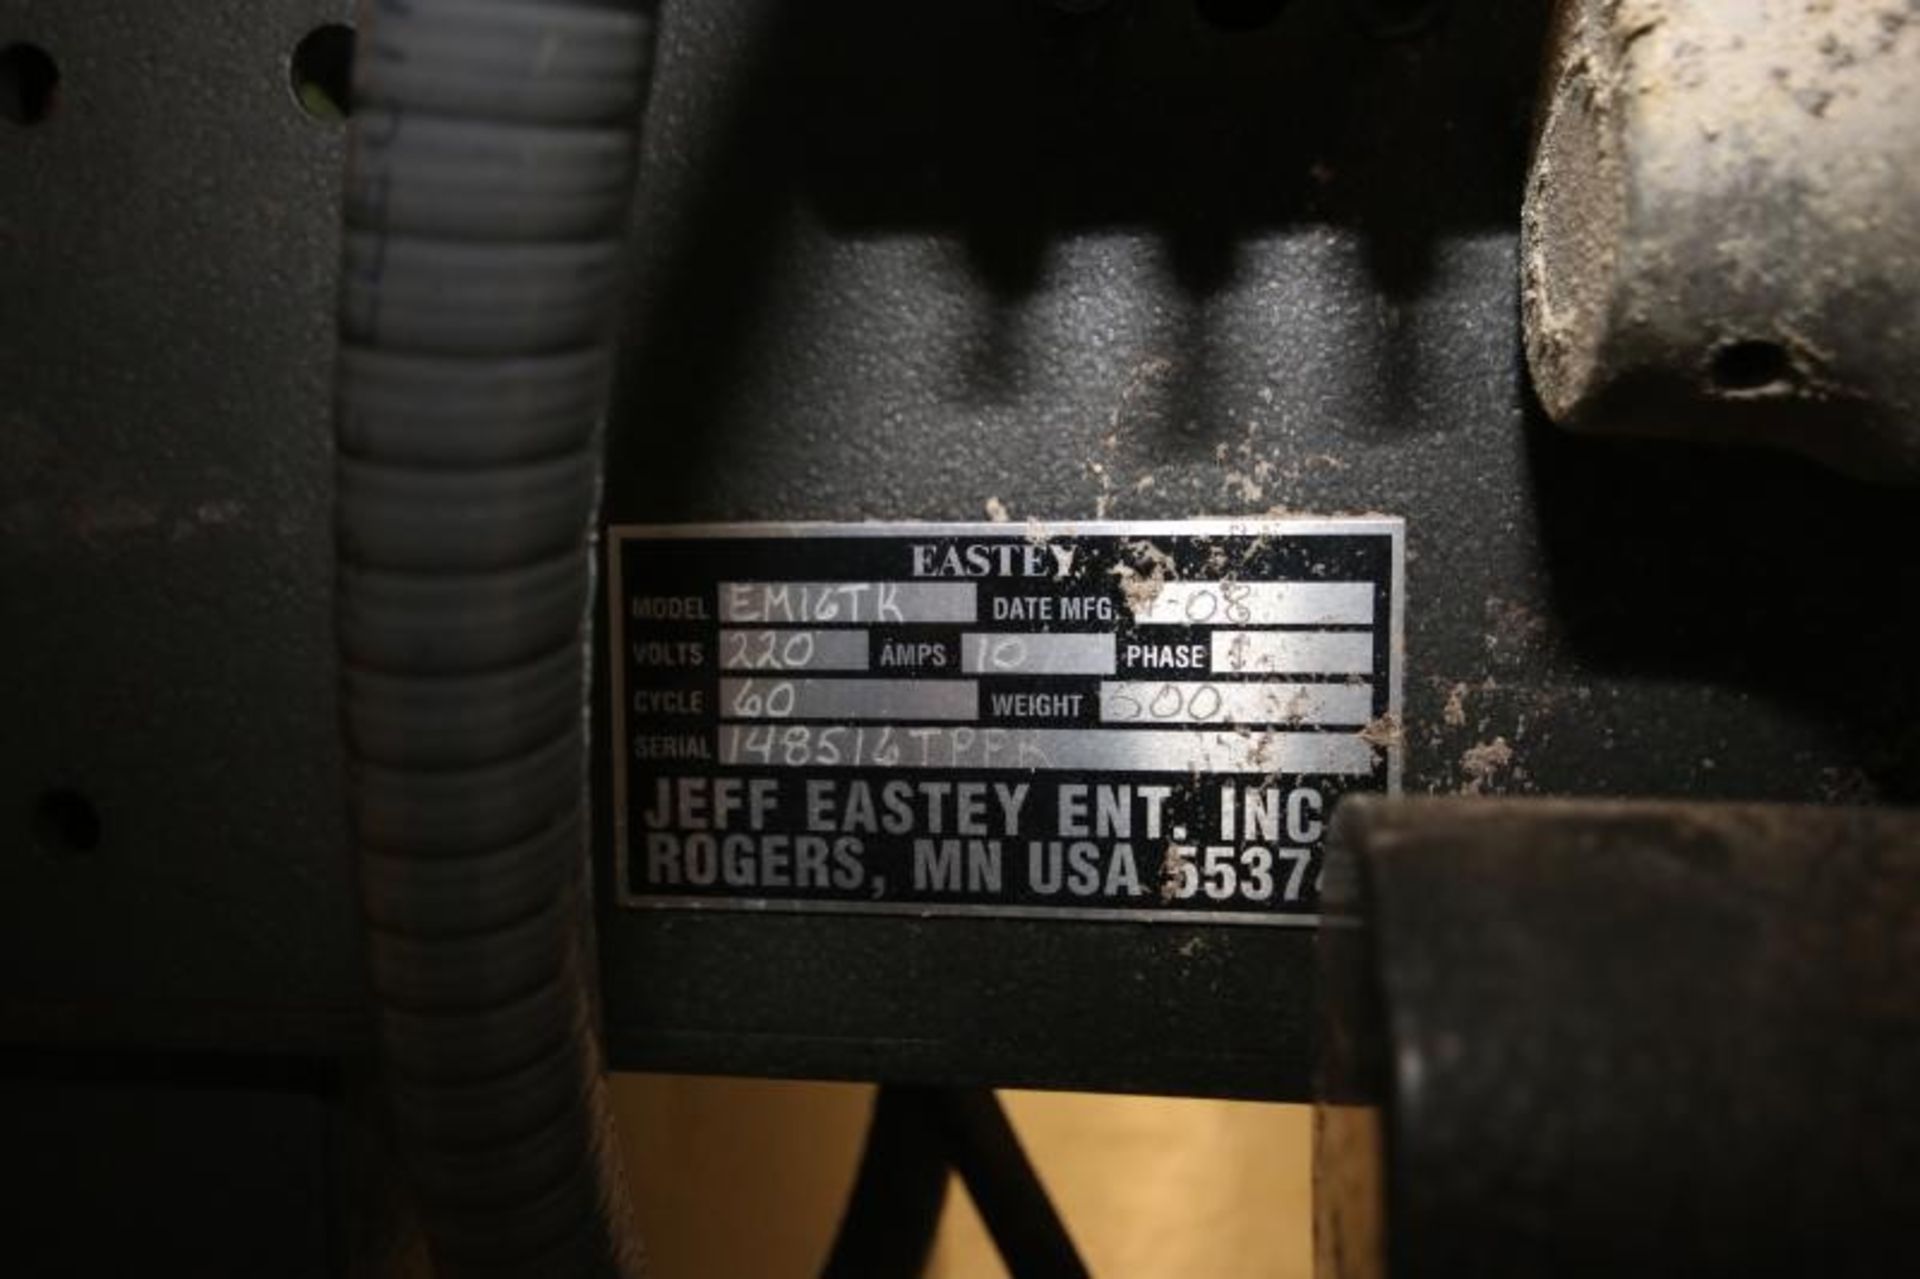 Eastley L Bar Sealer, Model EM16TK, SN 148516TPPK, 16" W x 20" L Semi Automatic, 220V (INV#81409)( - Image 3 of 5